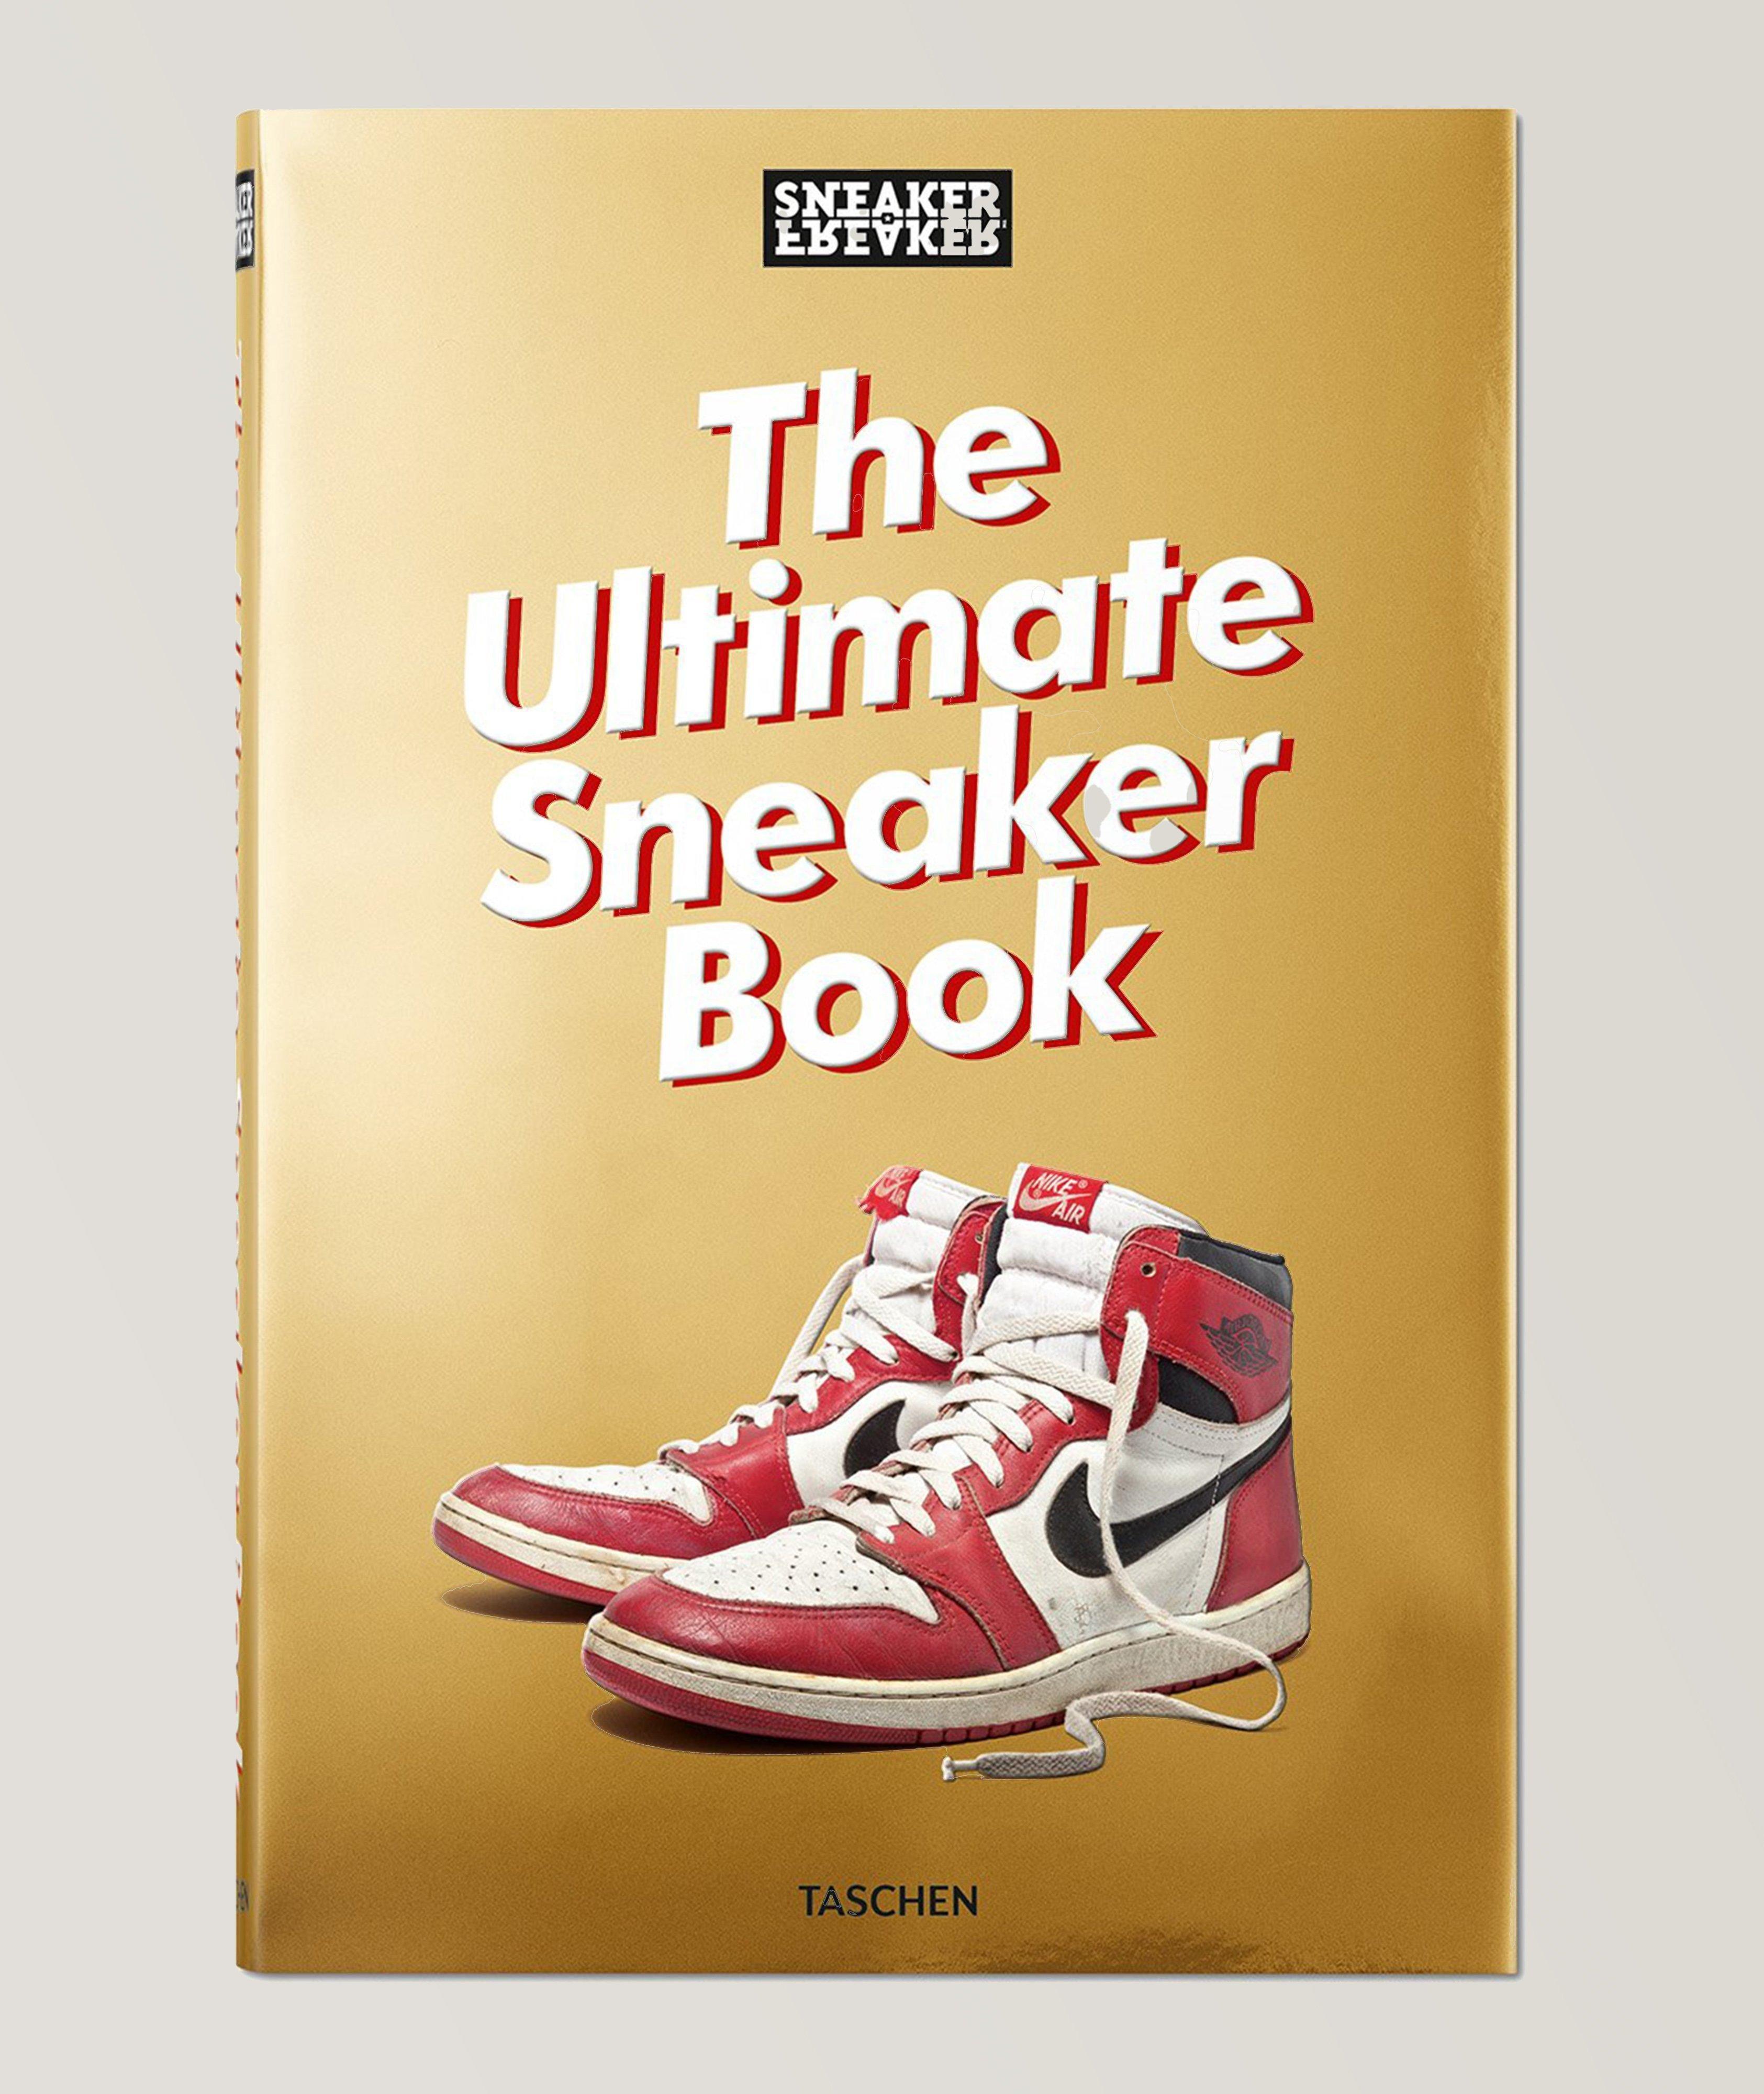 Sneaker Freaker. The Ultimate Sneaker Book image 0